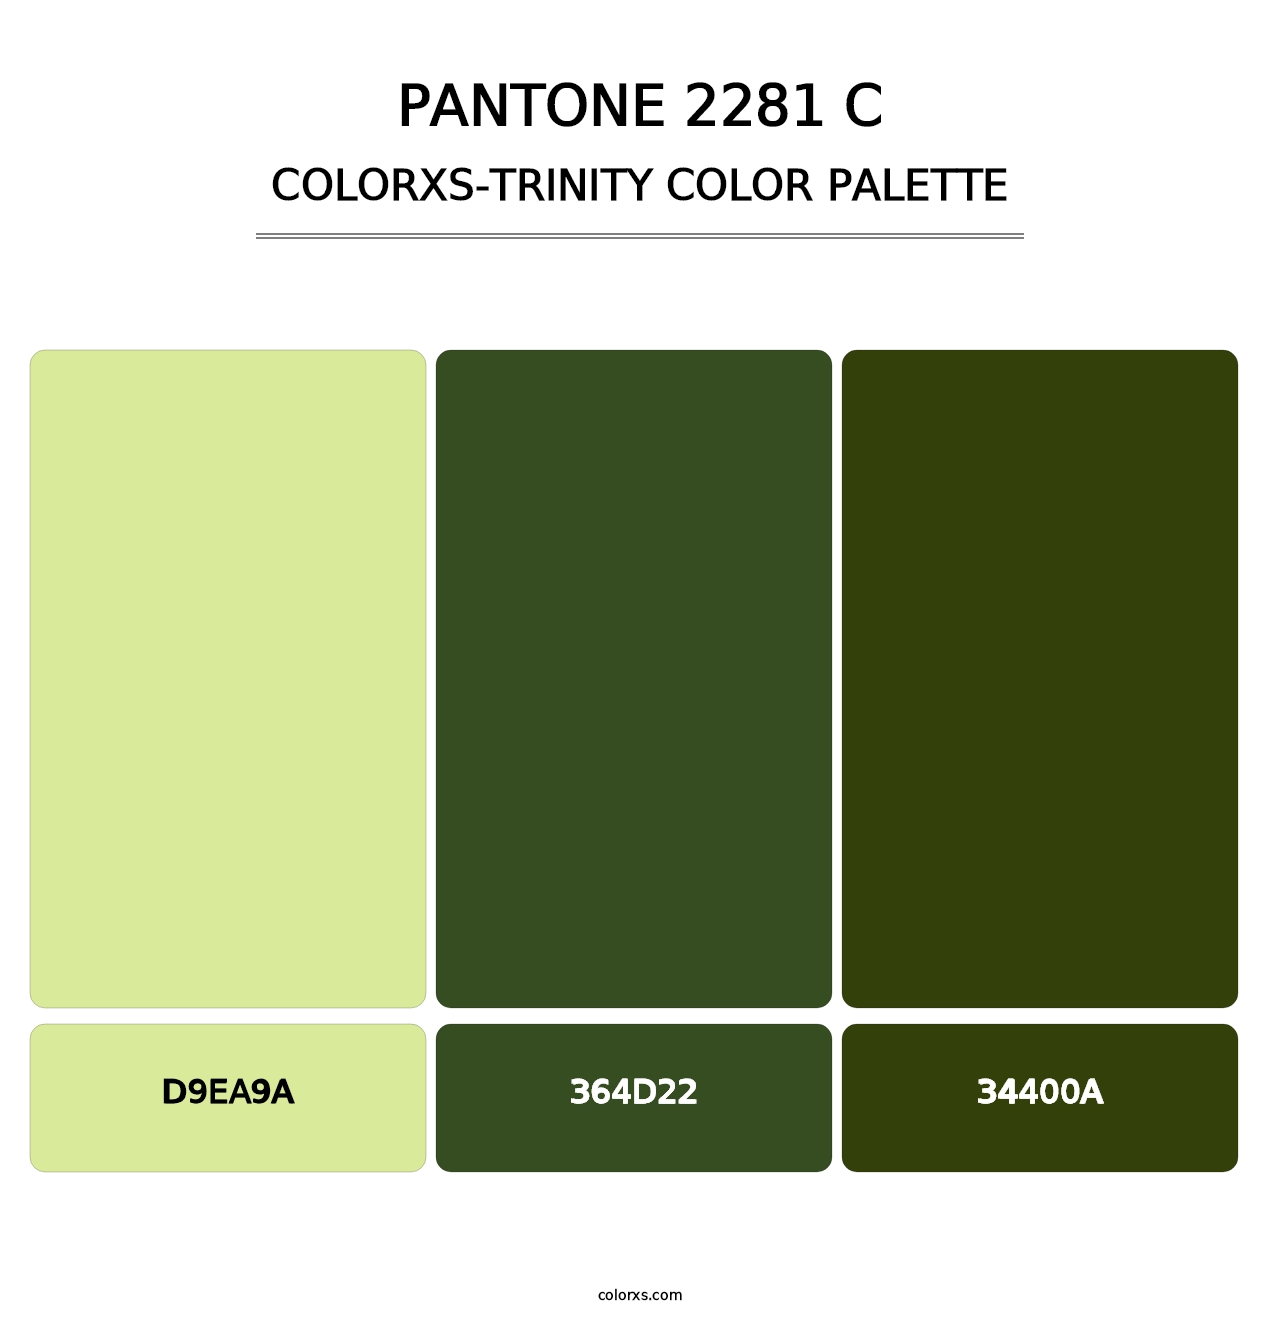 PANTONE 2281 C - Colorxs Trinity Palette